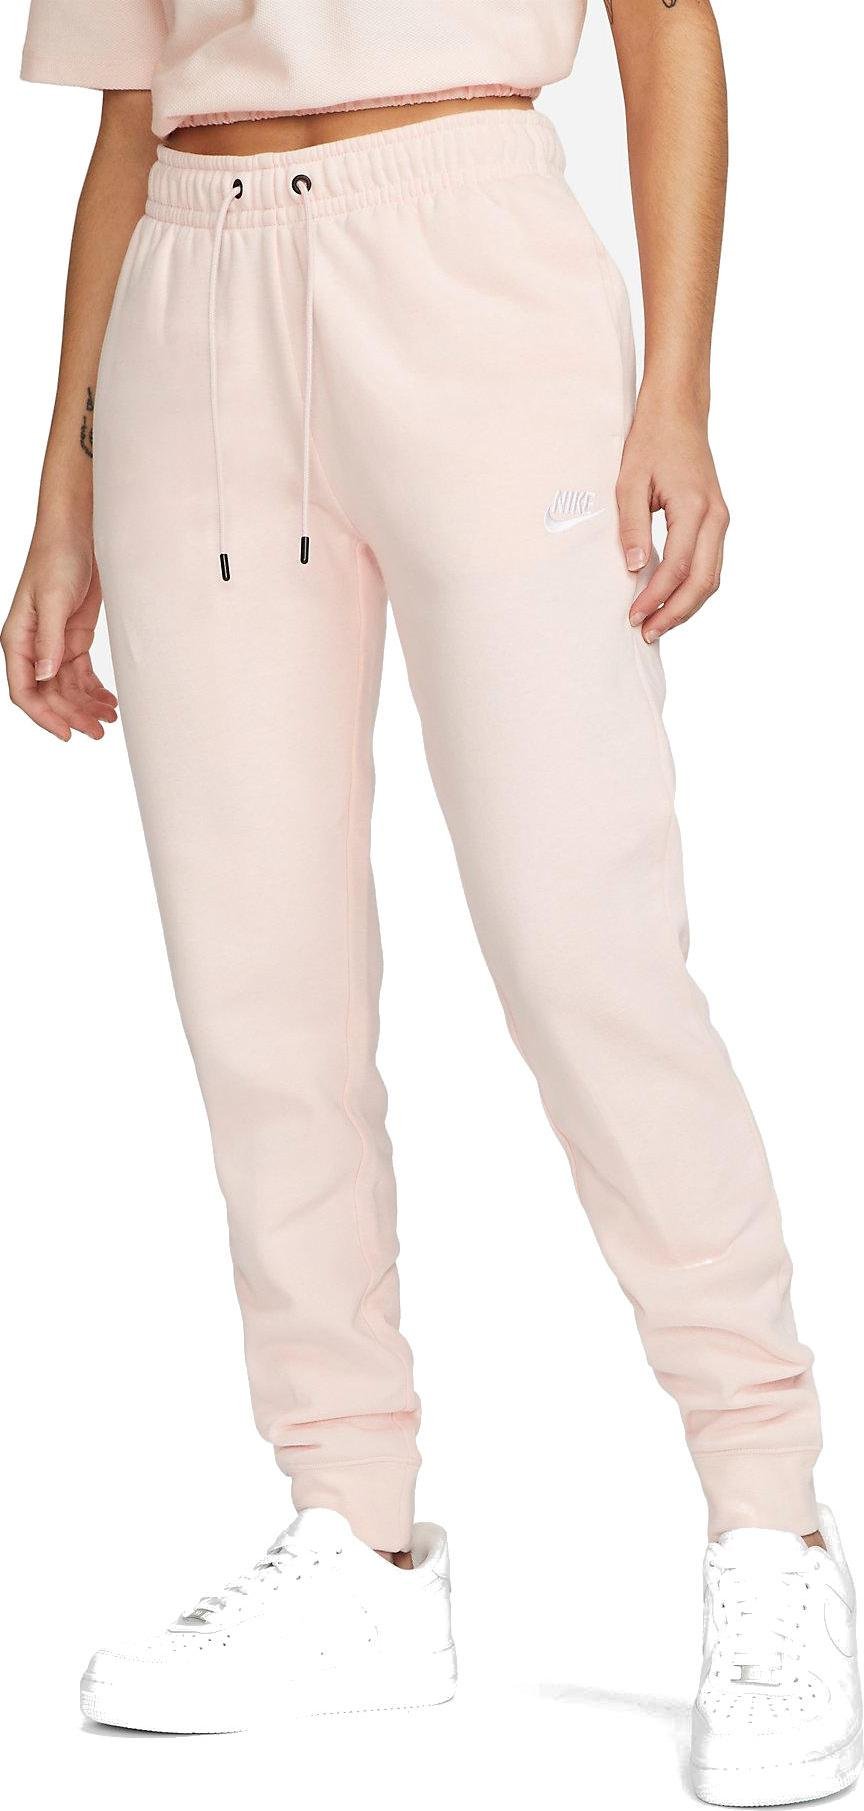 Sweatpants FLEXDOG Sportswear | bv4095-611 Essential Sweatpants Nike